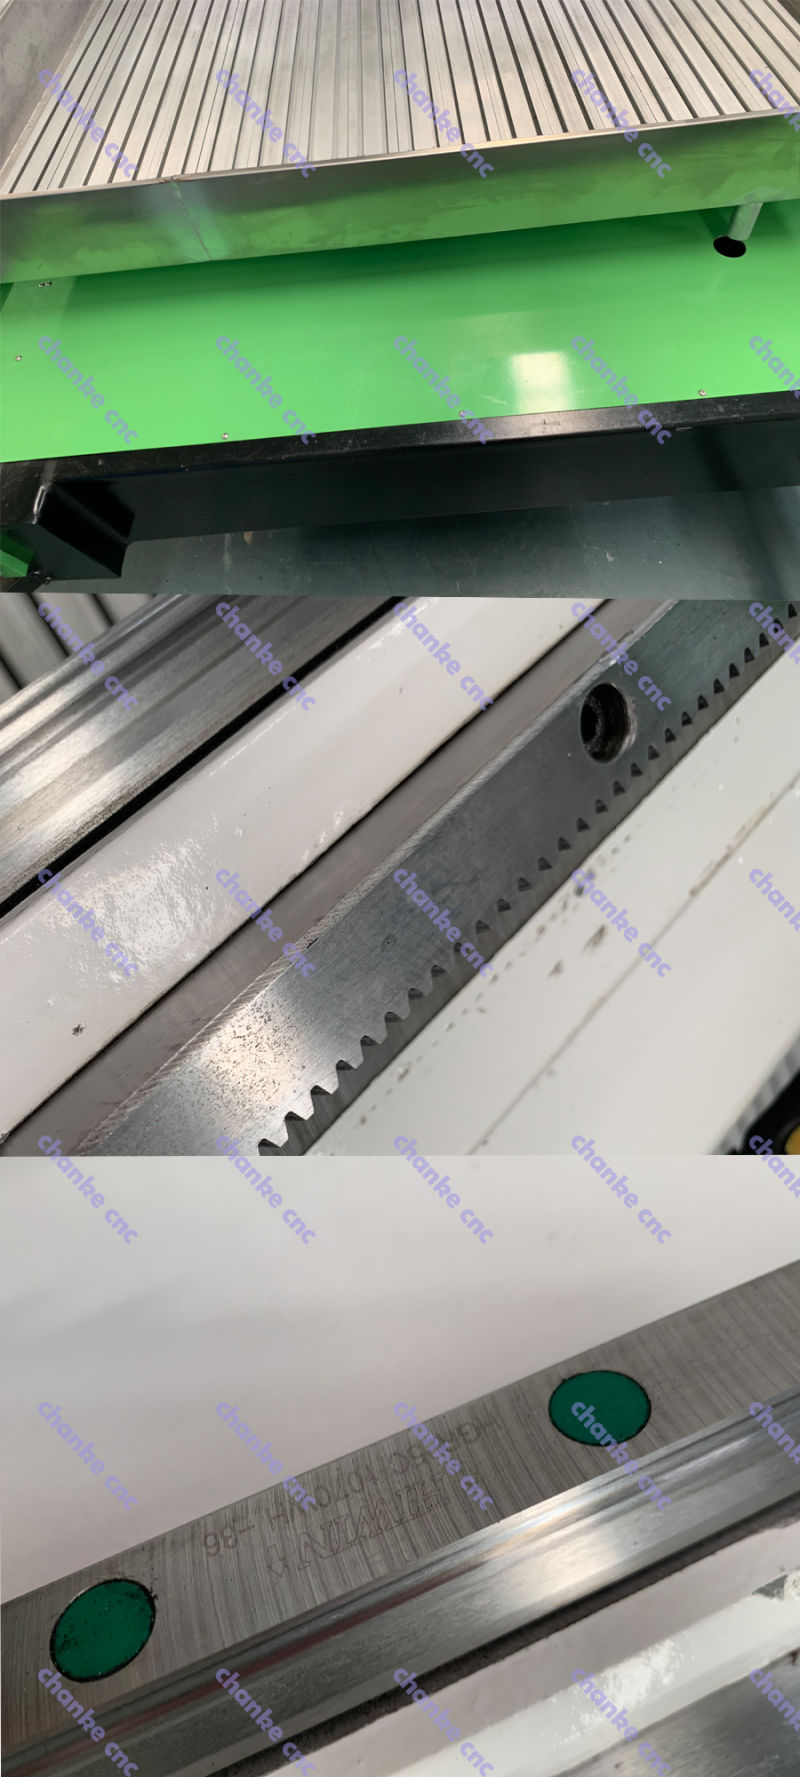 1300X2500mm Water Tank Metal Cutting Engraving Wood CNC Machine for Funriture Sofa